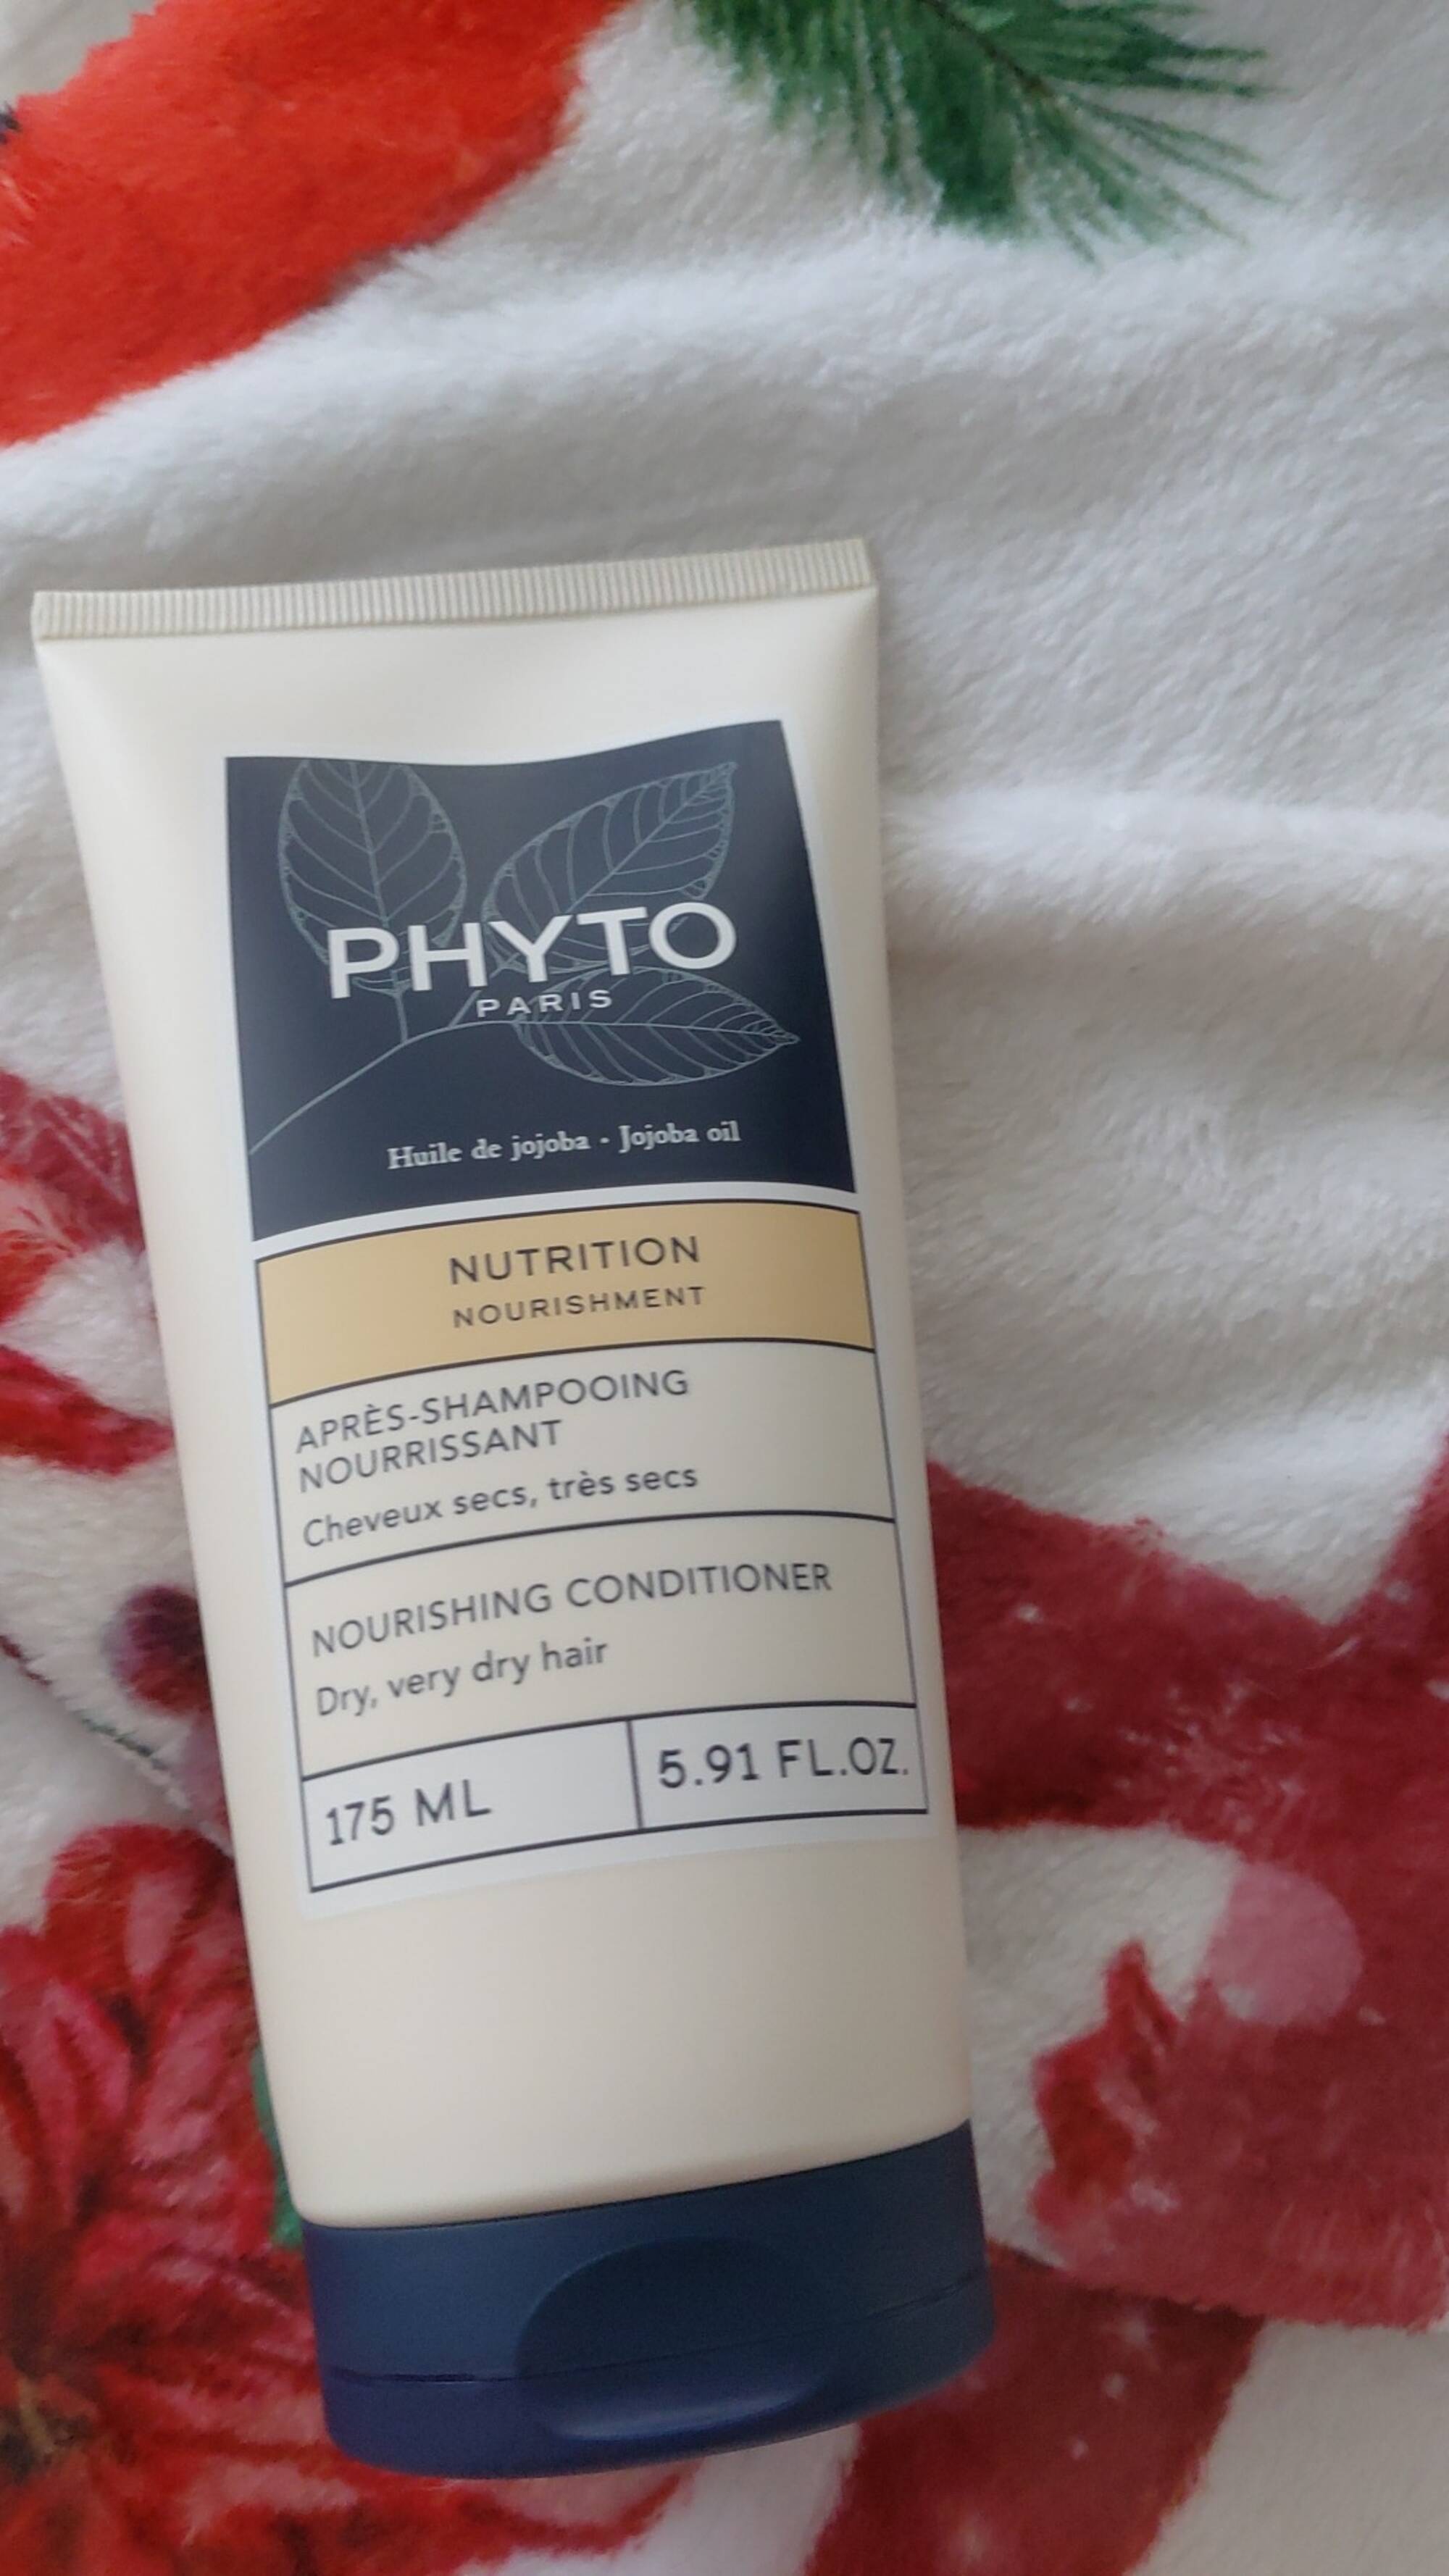 PHYTO - nutrition nourishment:après shampoing